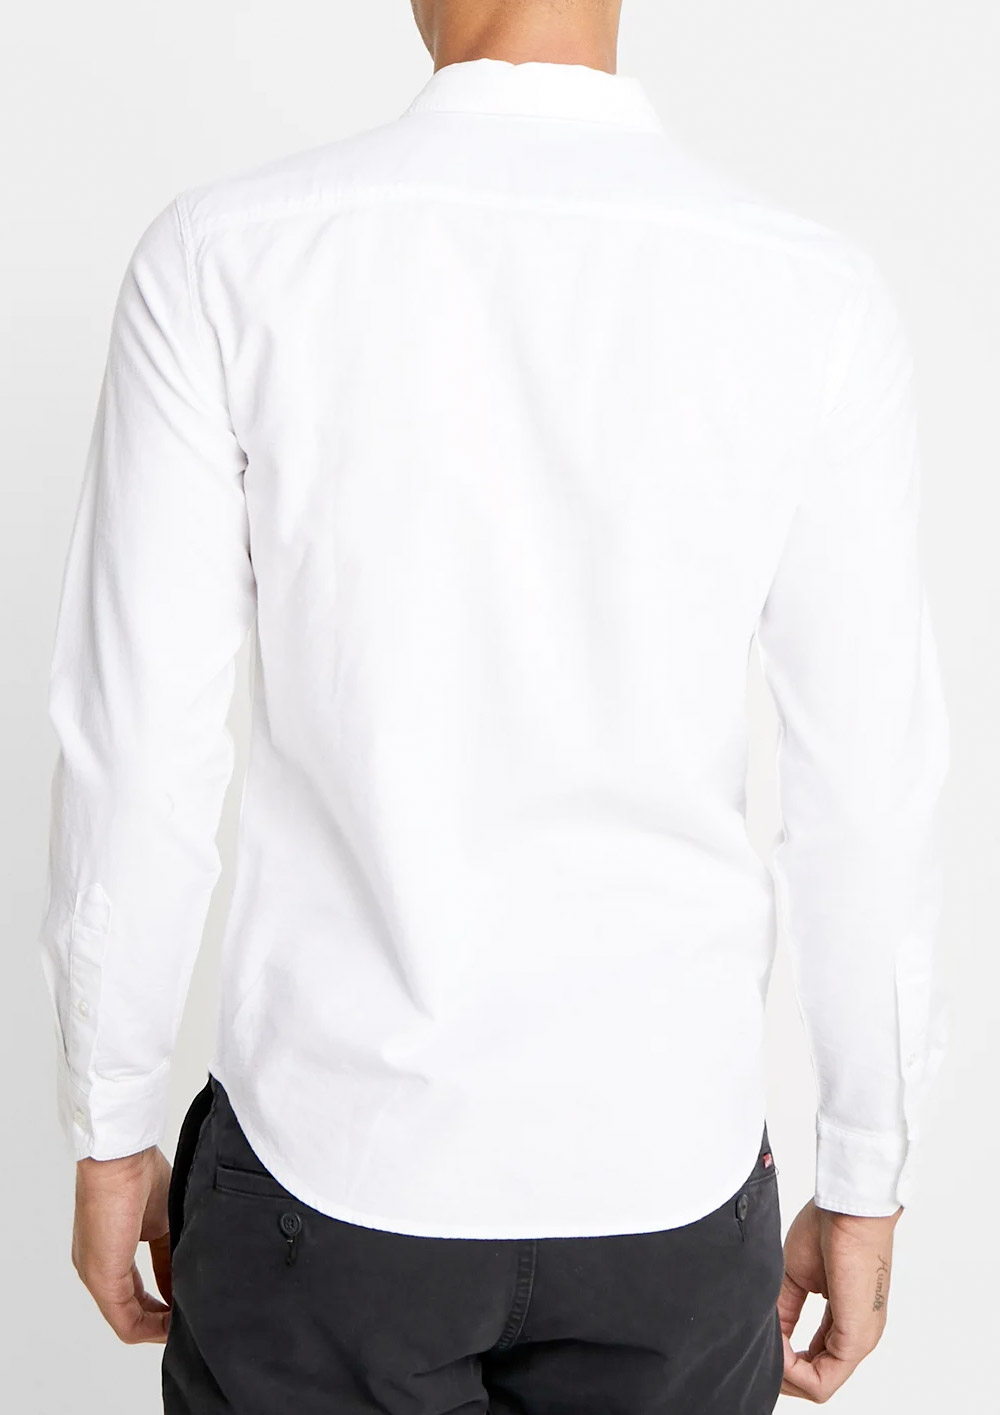 Levis x FCSP shirt "Housemark Slim Fit" white 